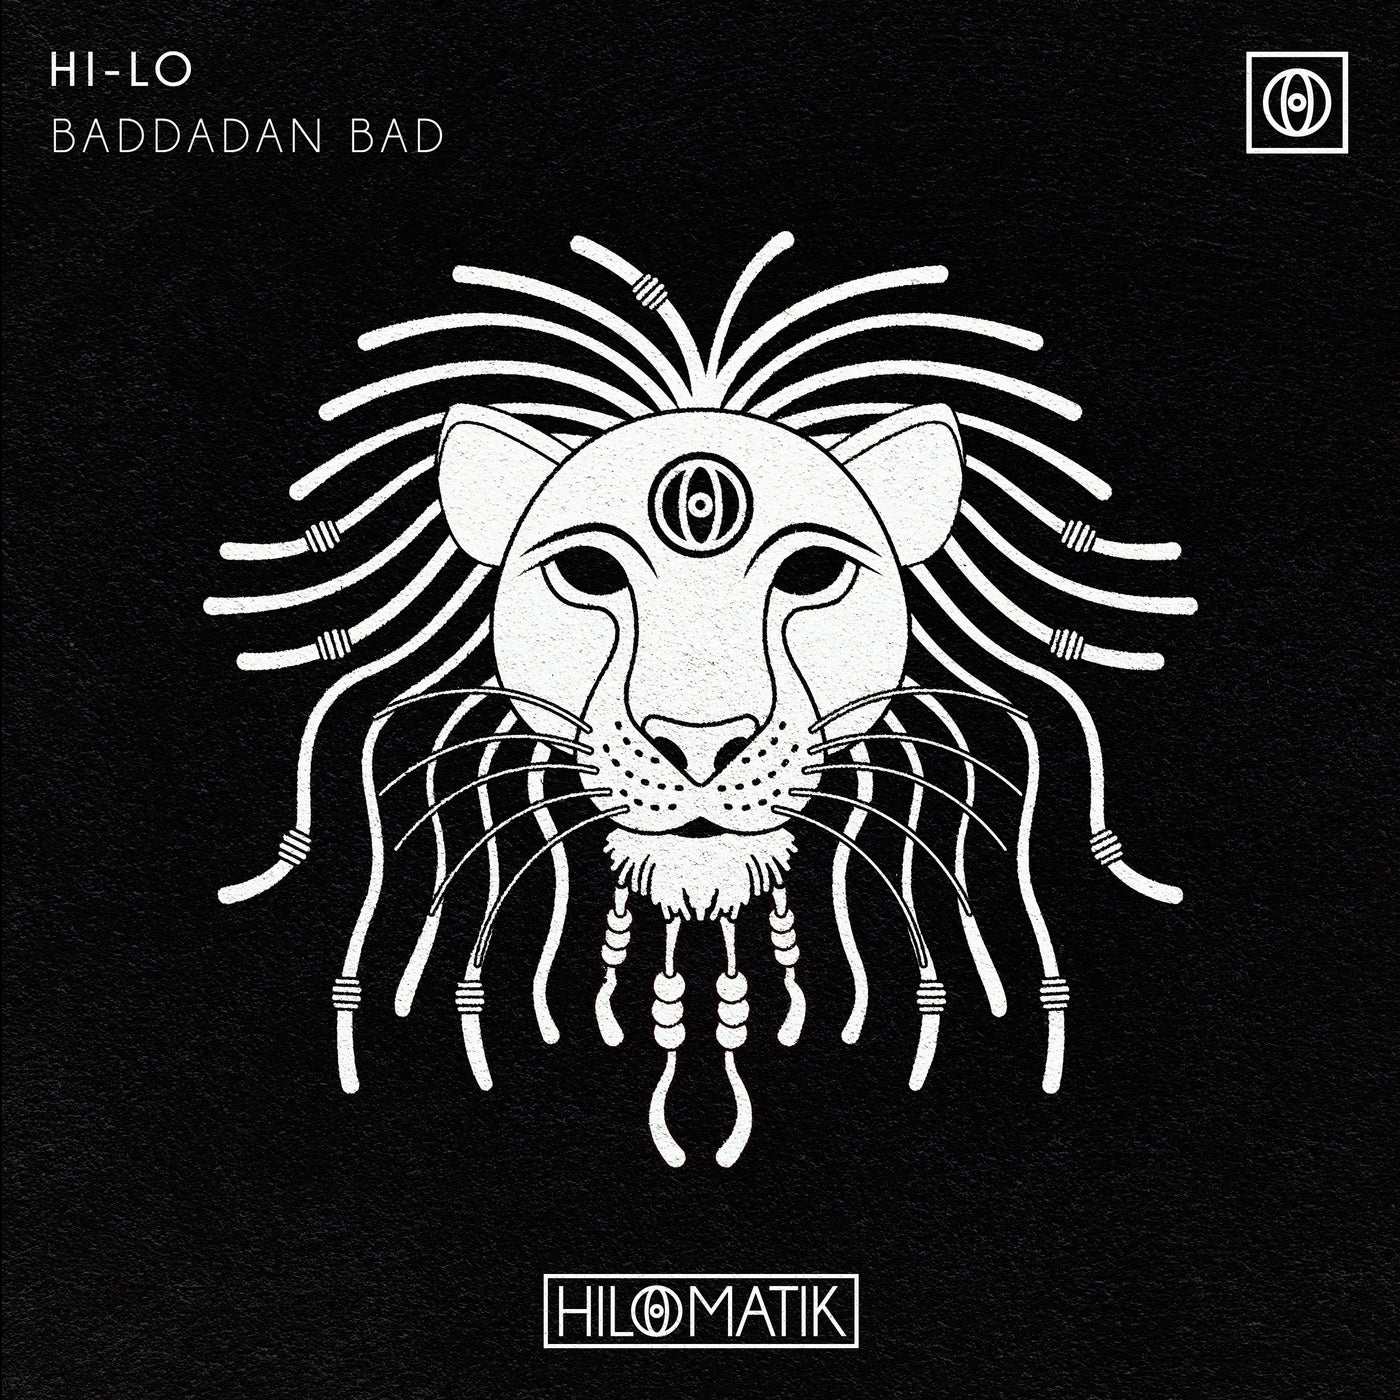 image cover: HI-LO - BADDADAN BAD (Extended Mix) on HILOMATIK